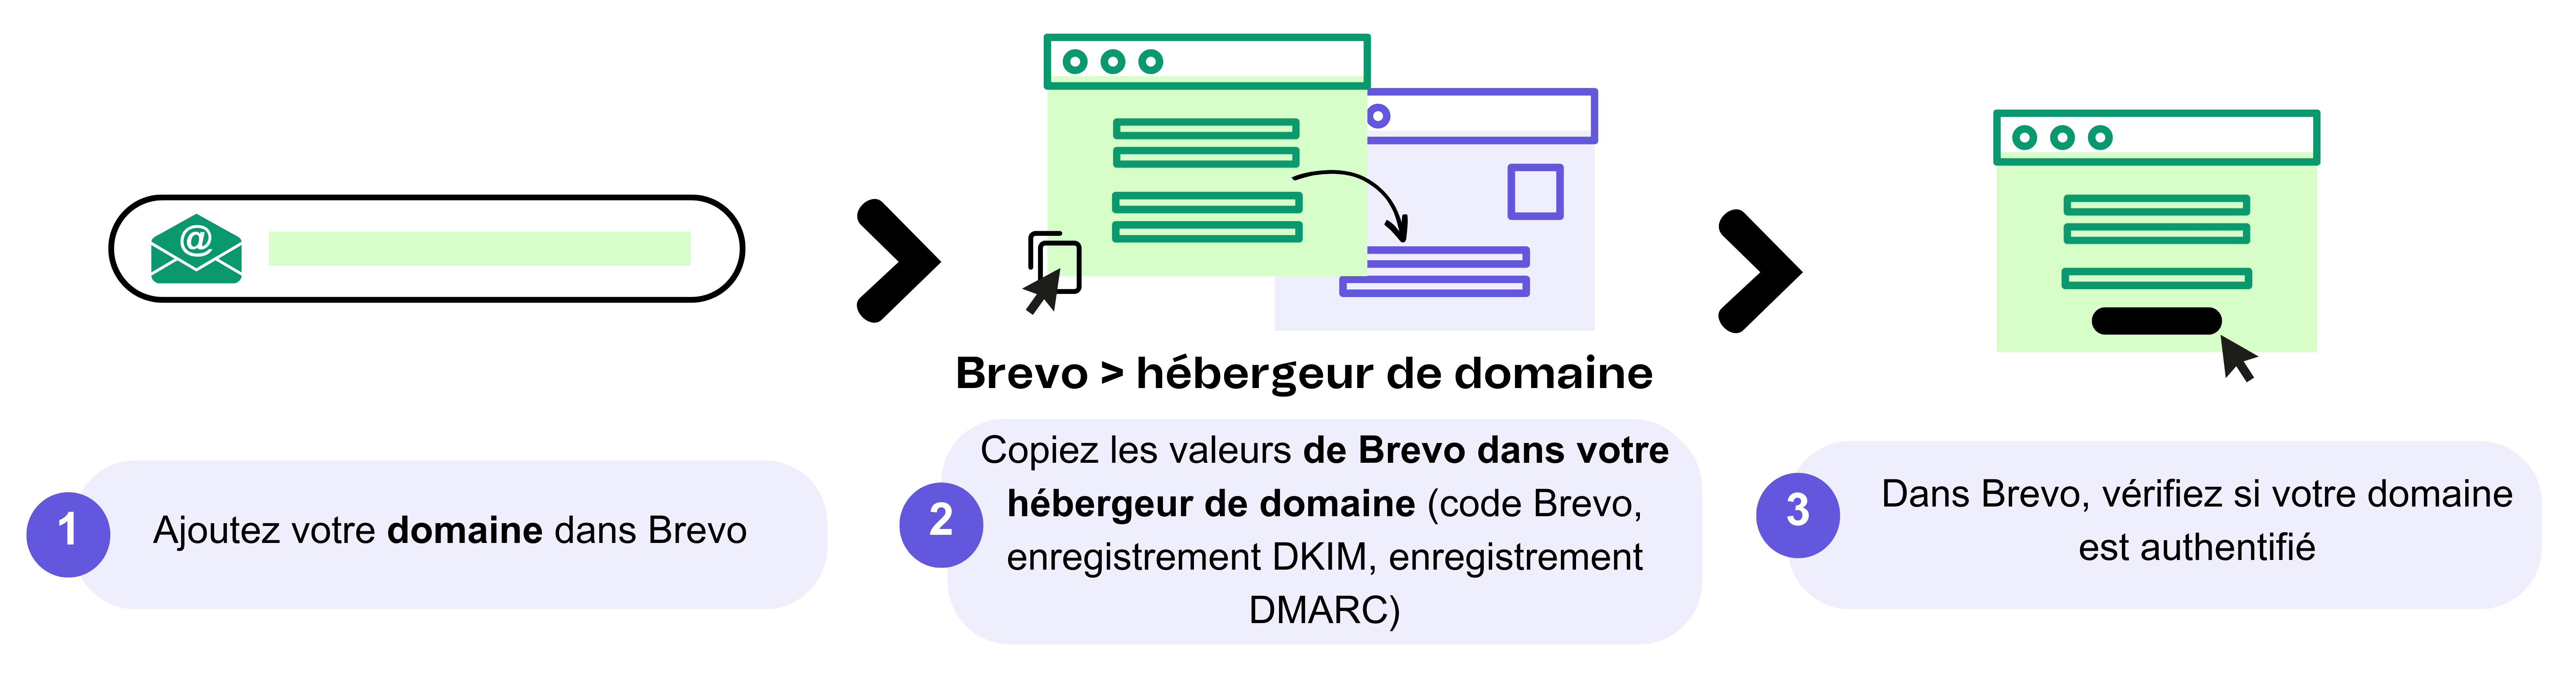 Domain authentication schema_fr.png